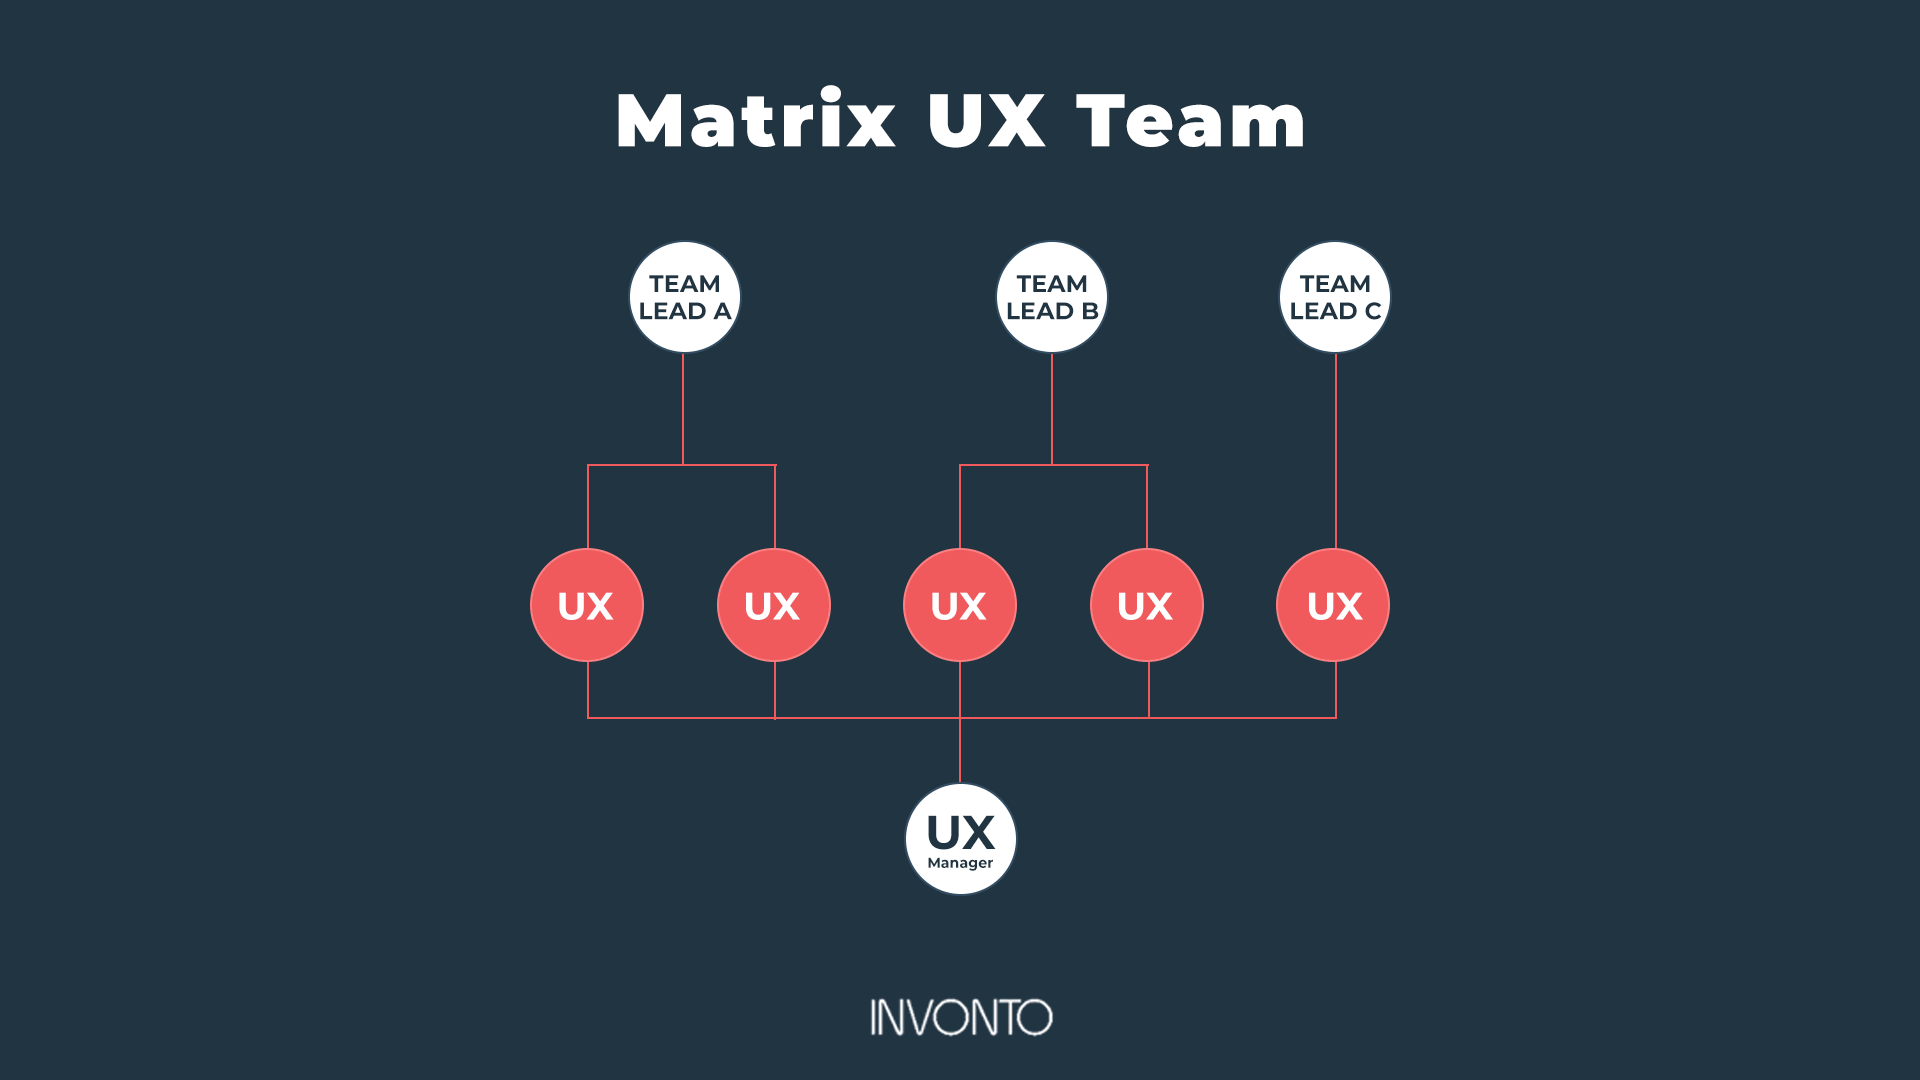 ux design process team structure example matrix ux team